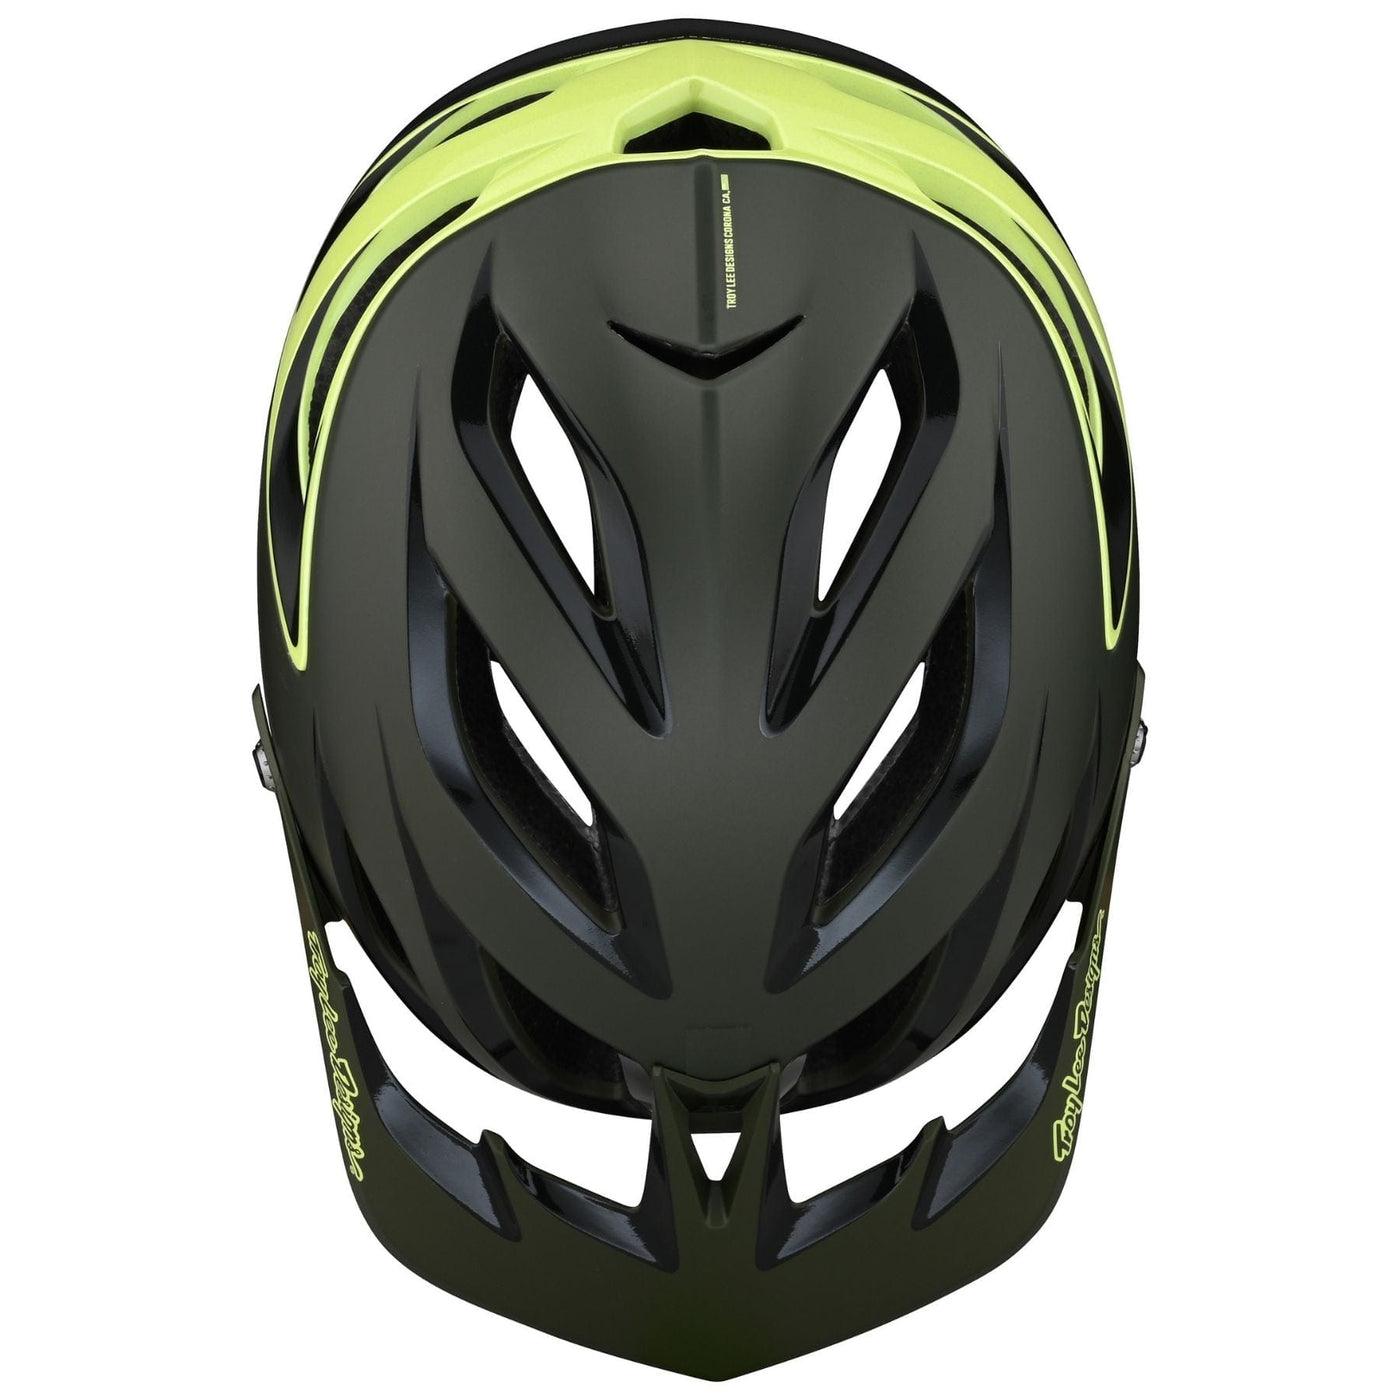 open-face helmet, MIPS protection